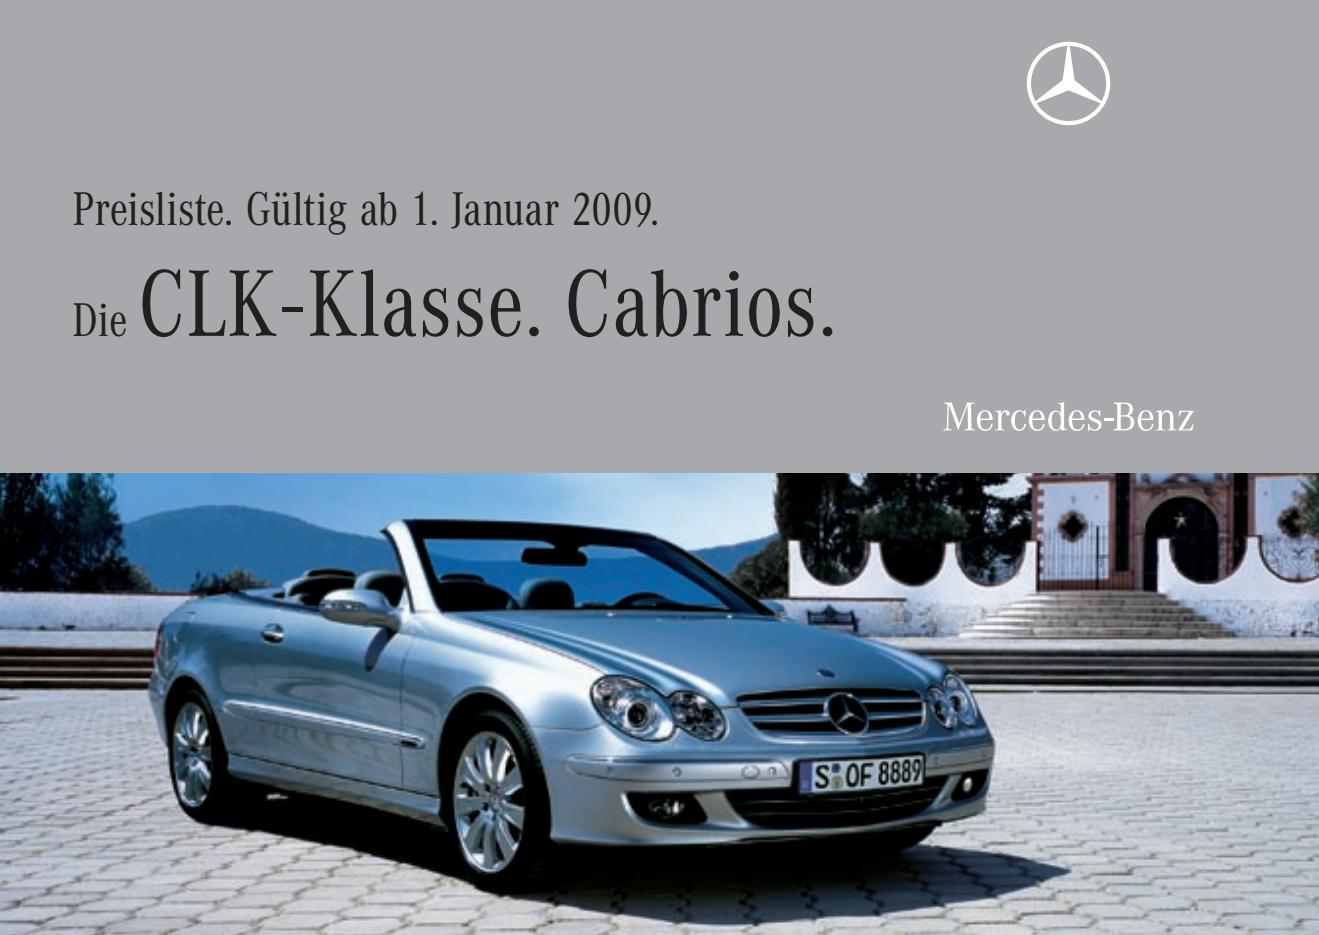 Mercedes-Benz A 209 CLK-Klasse Cabriolet Preisliste 01/2009